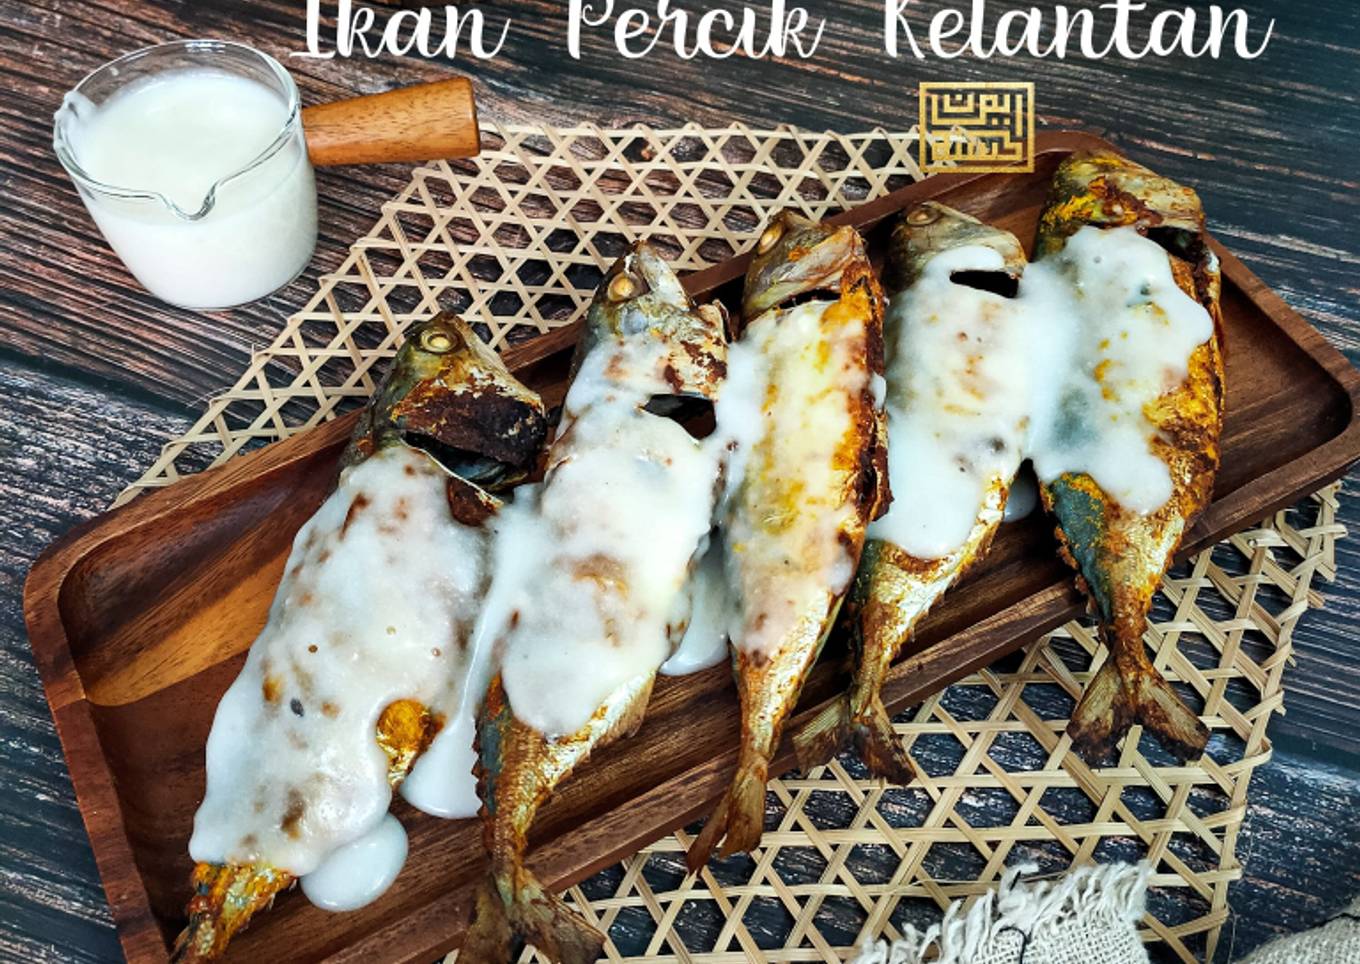 Resepi Ikan Percik Kelantan yang Lazat dan Easy